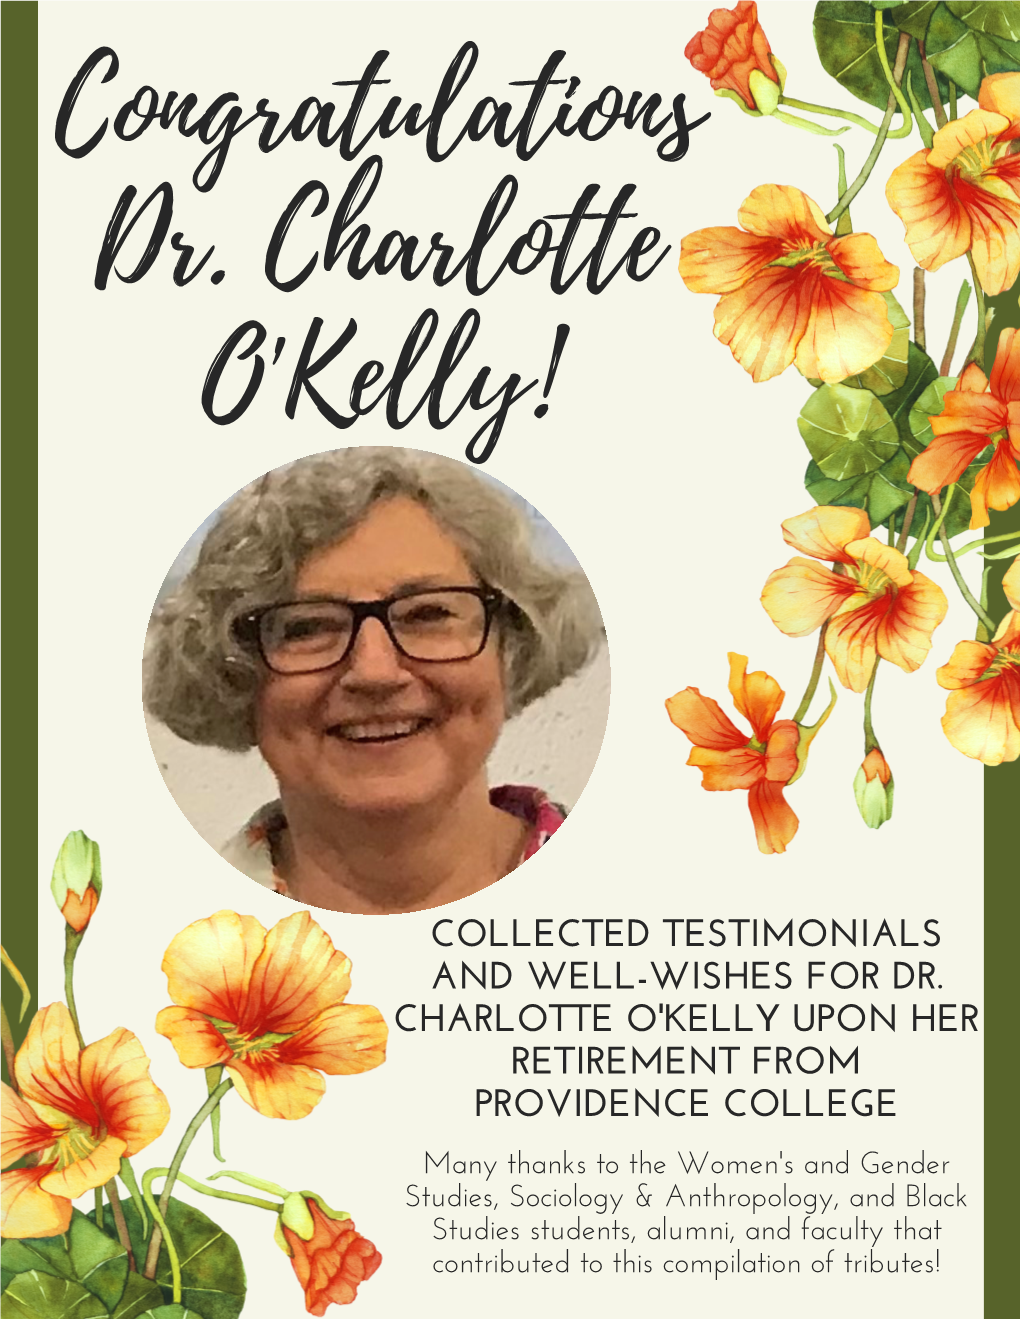 Congratulations Dr. Charlotte O'kelly!